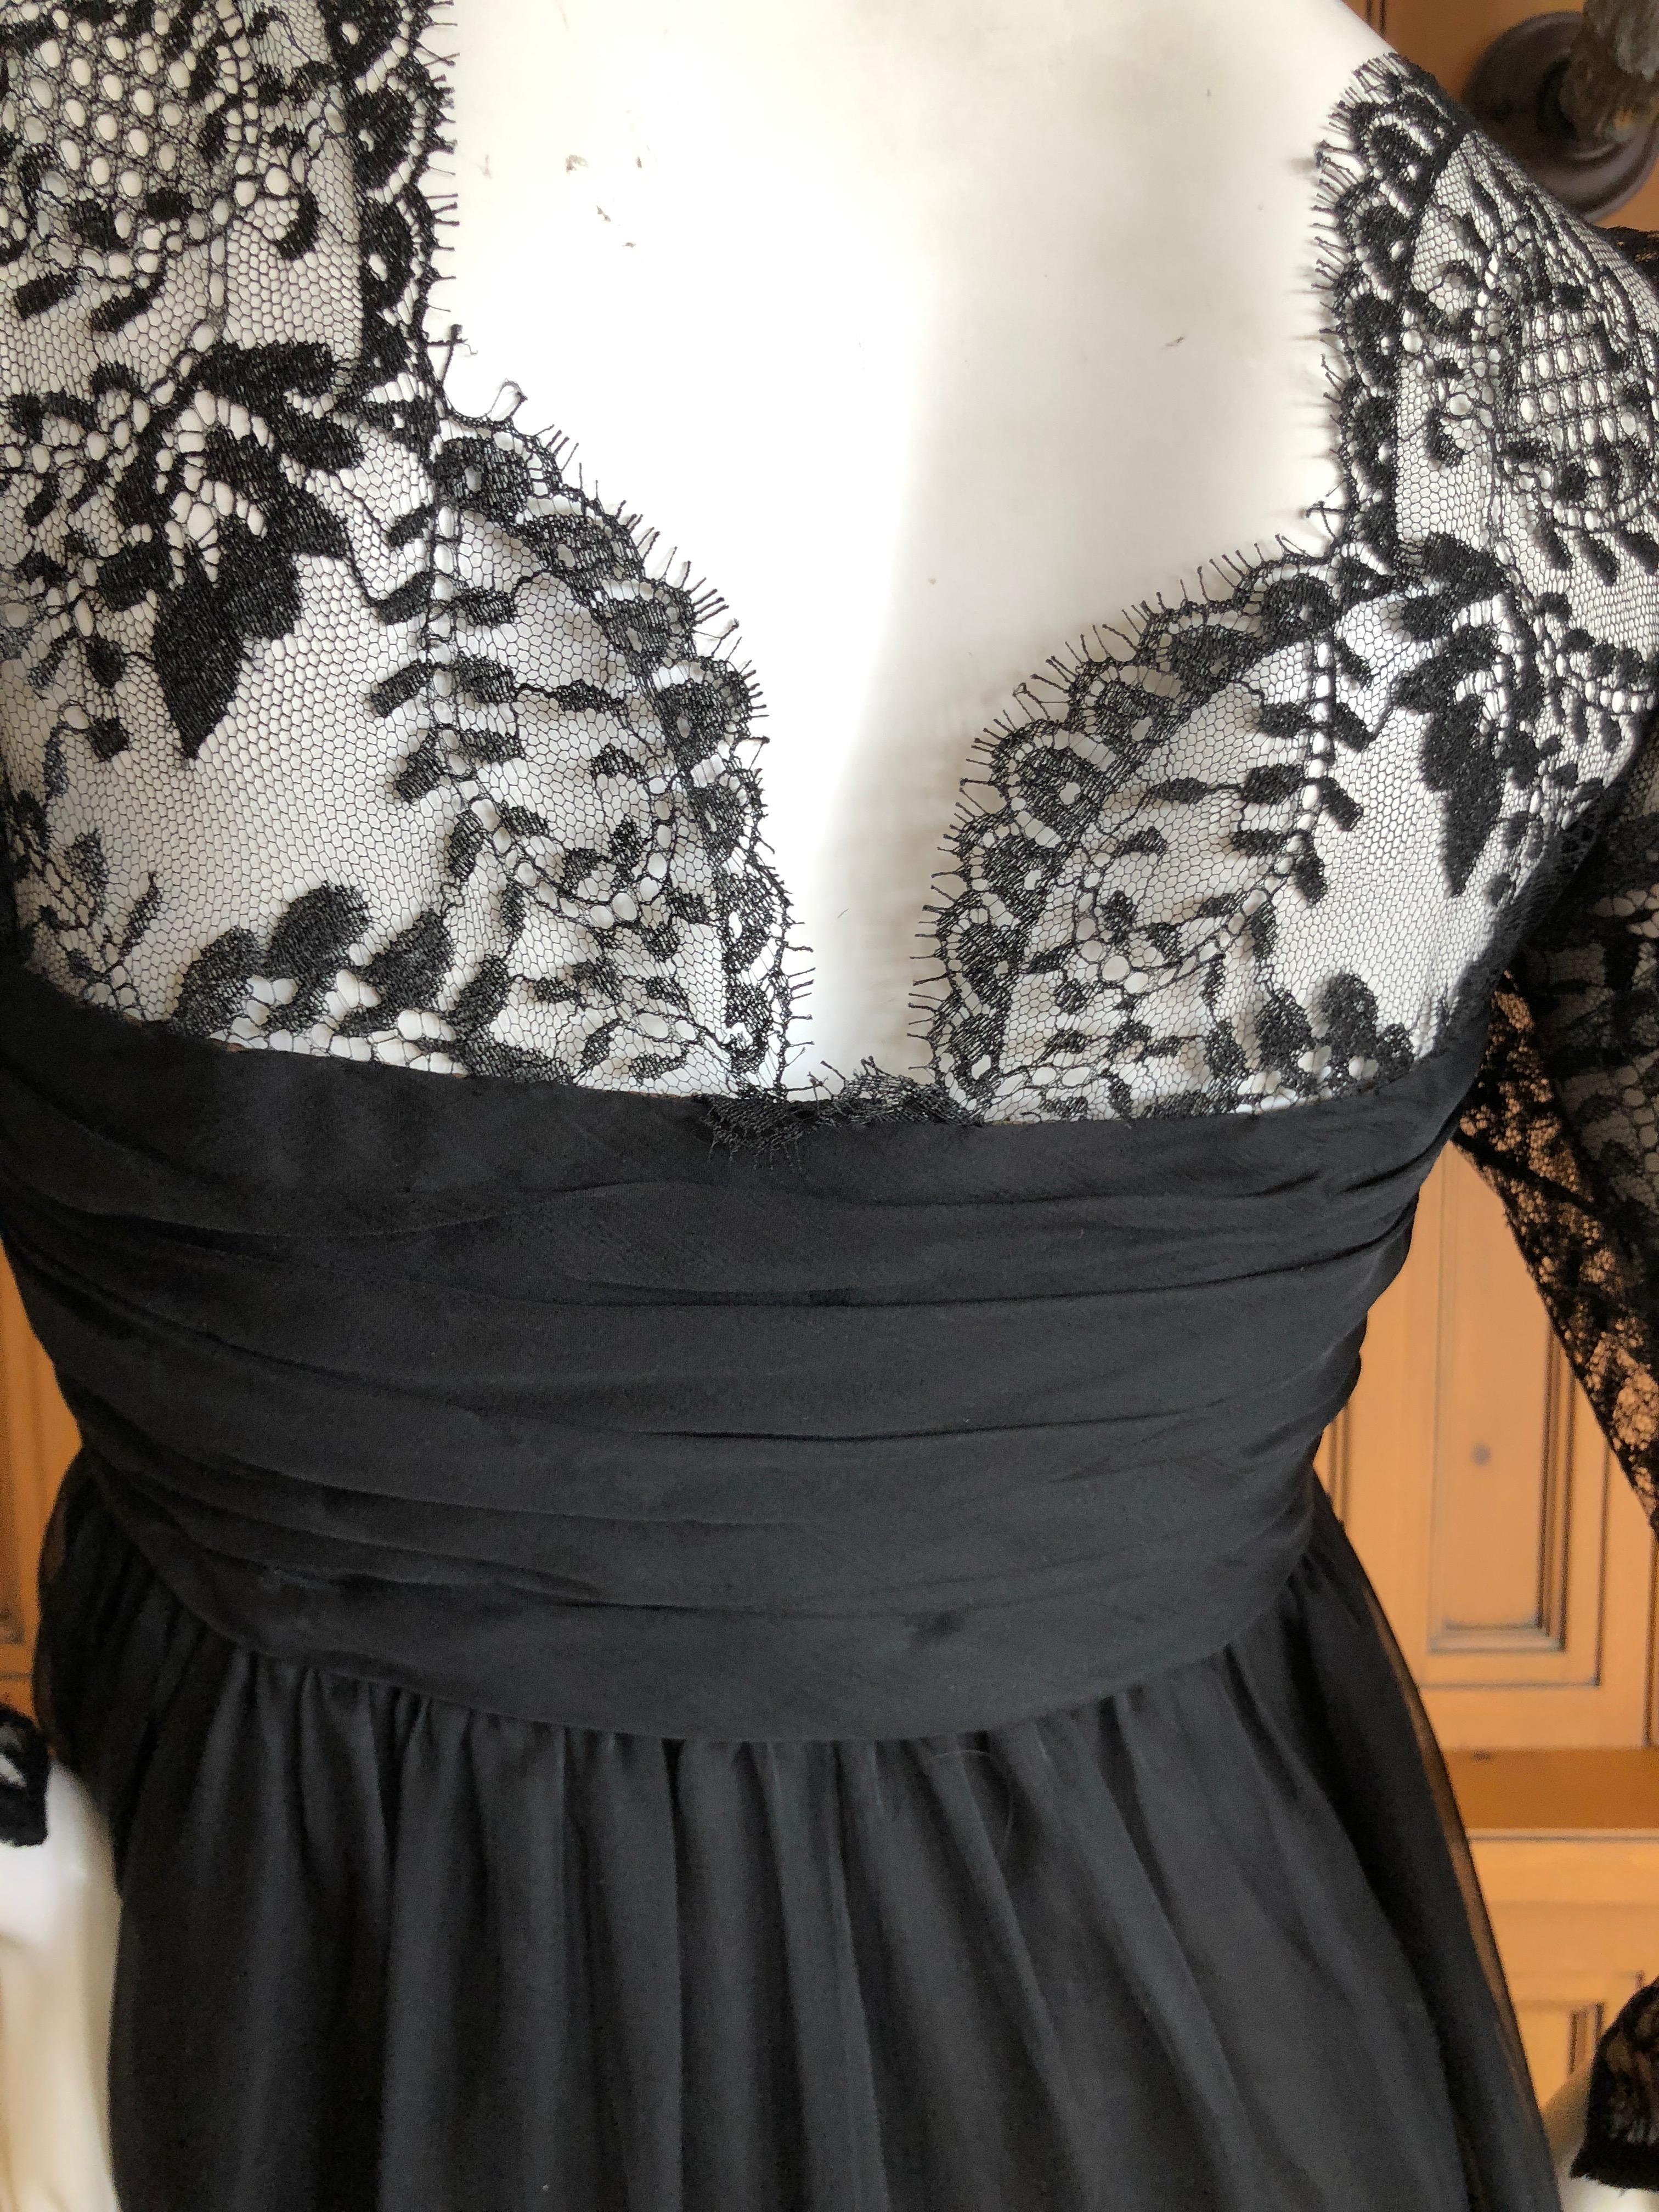 Yves Saint Laurent Numbered Haute Couture 1970's Black Lace Flou Evening Dress For Sale 6